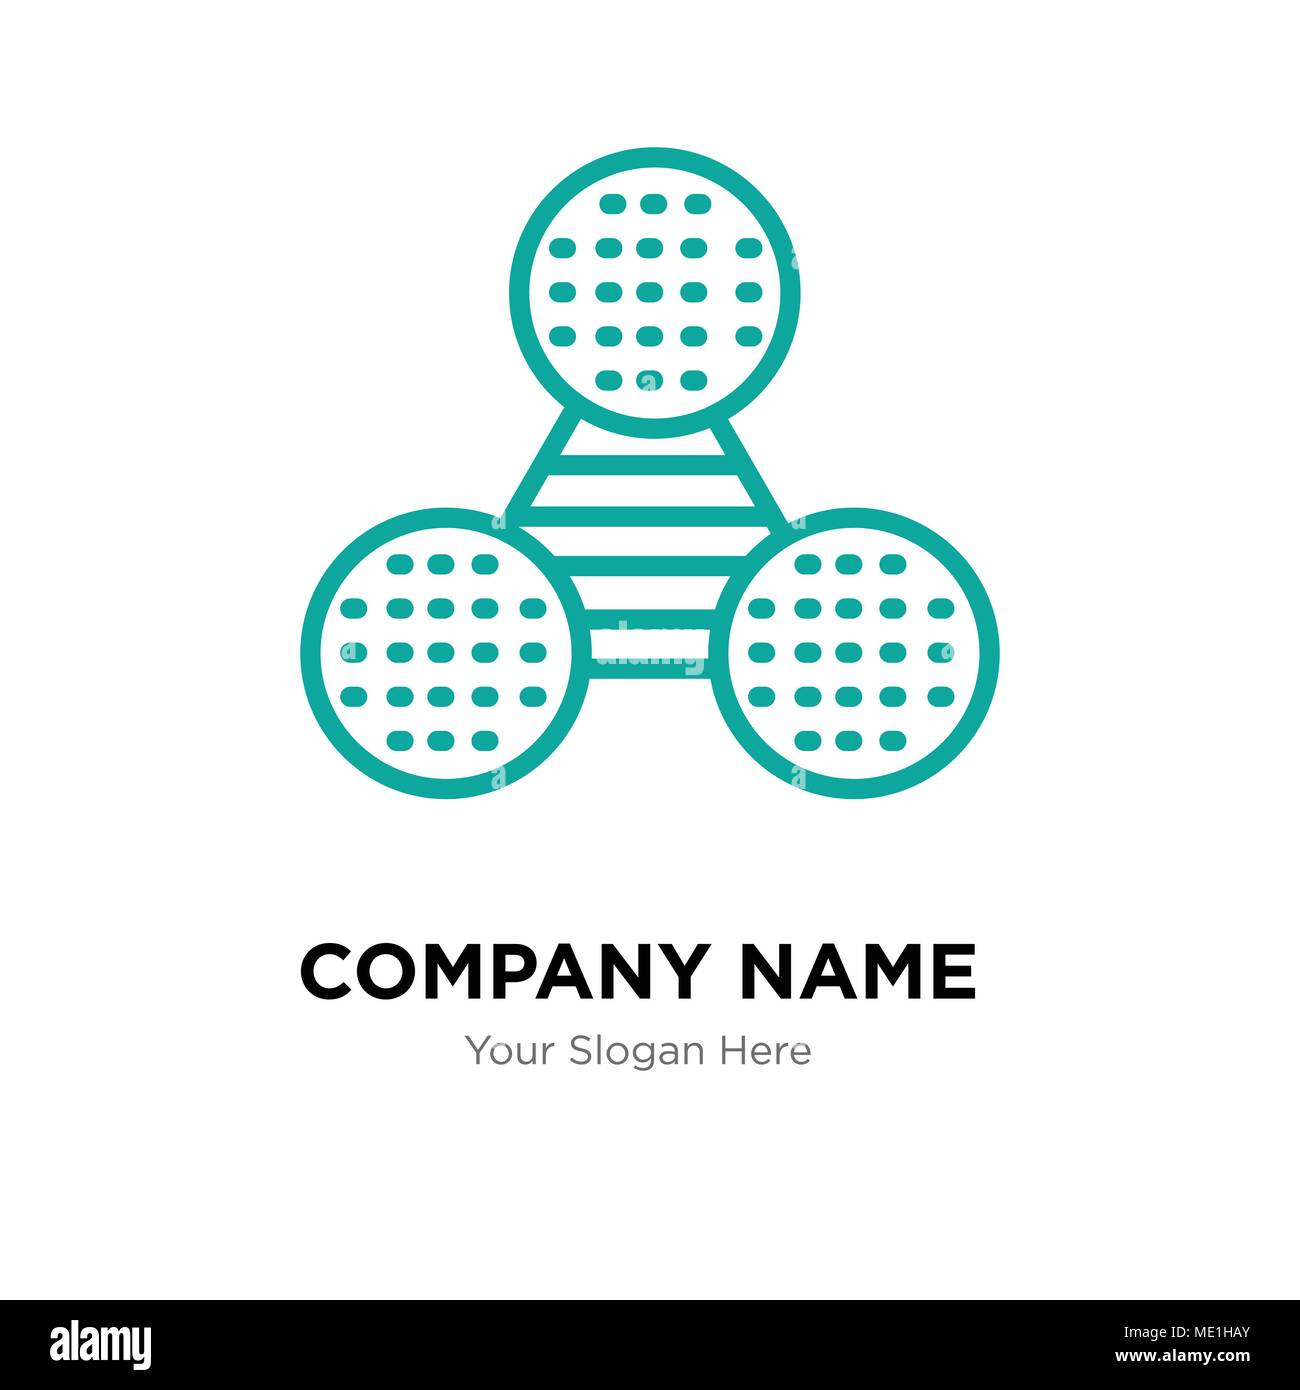 Pie Grafik Vergleich Company Logo Design Template, Business corporate Vektor icon Stock Vektor